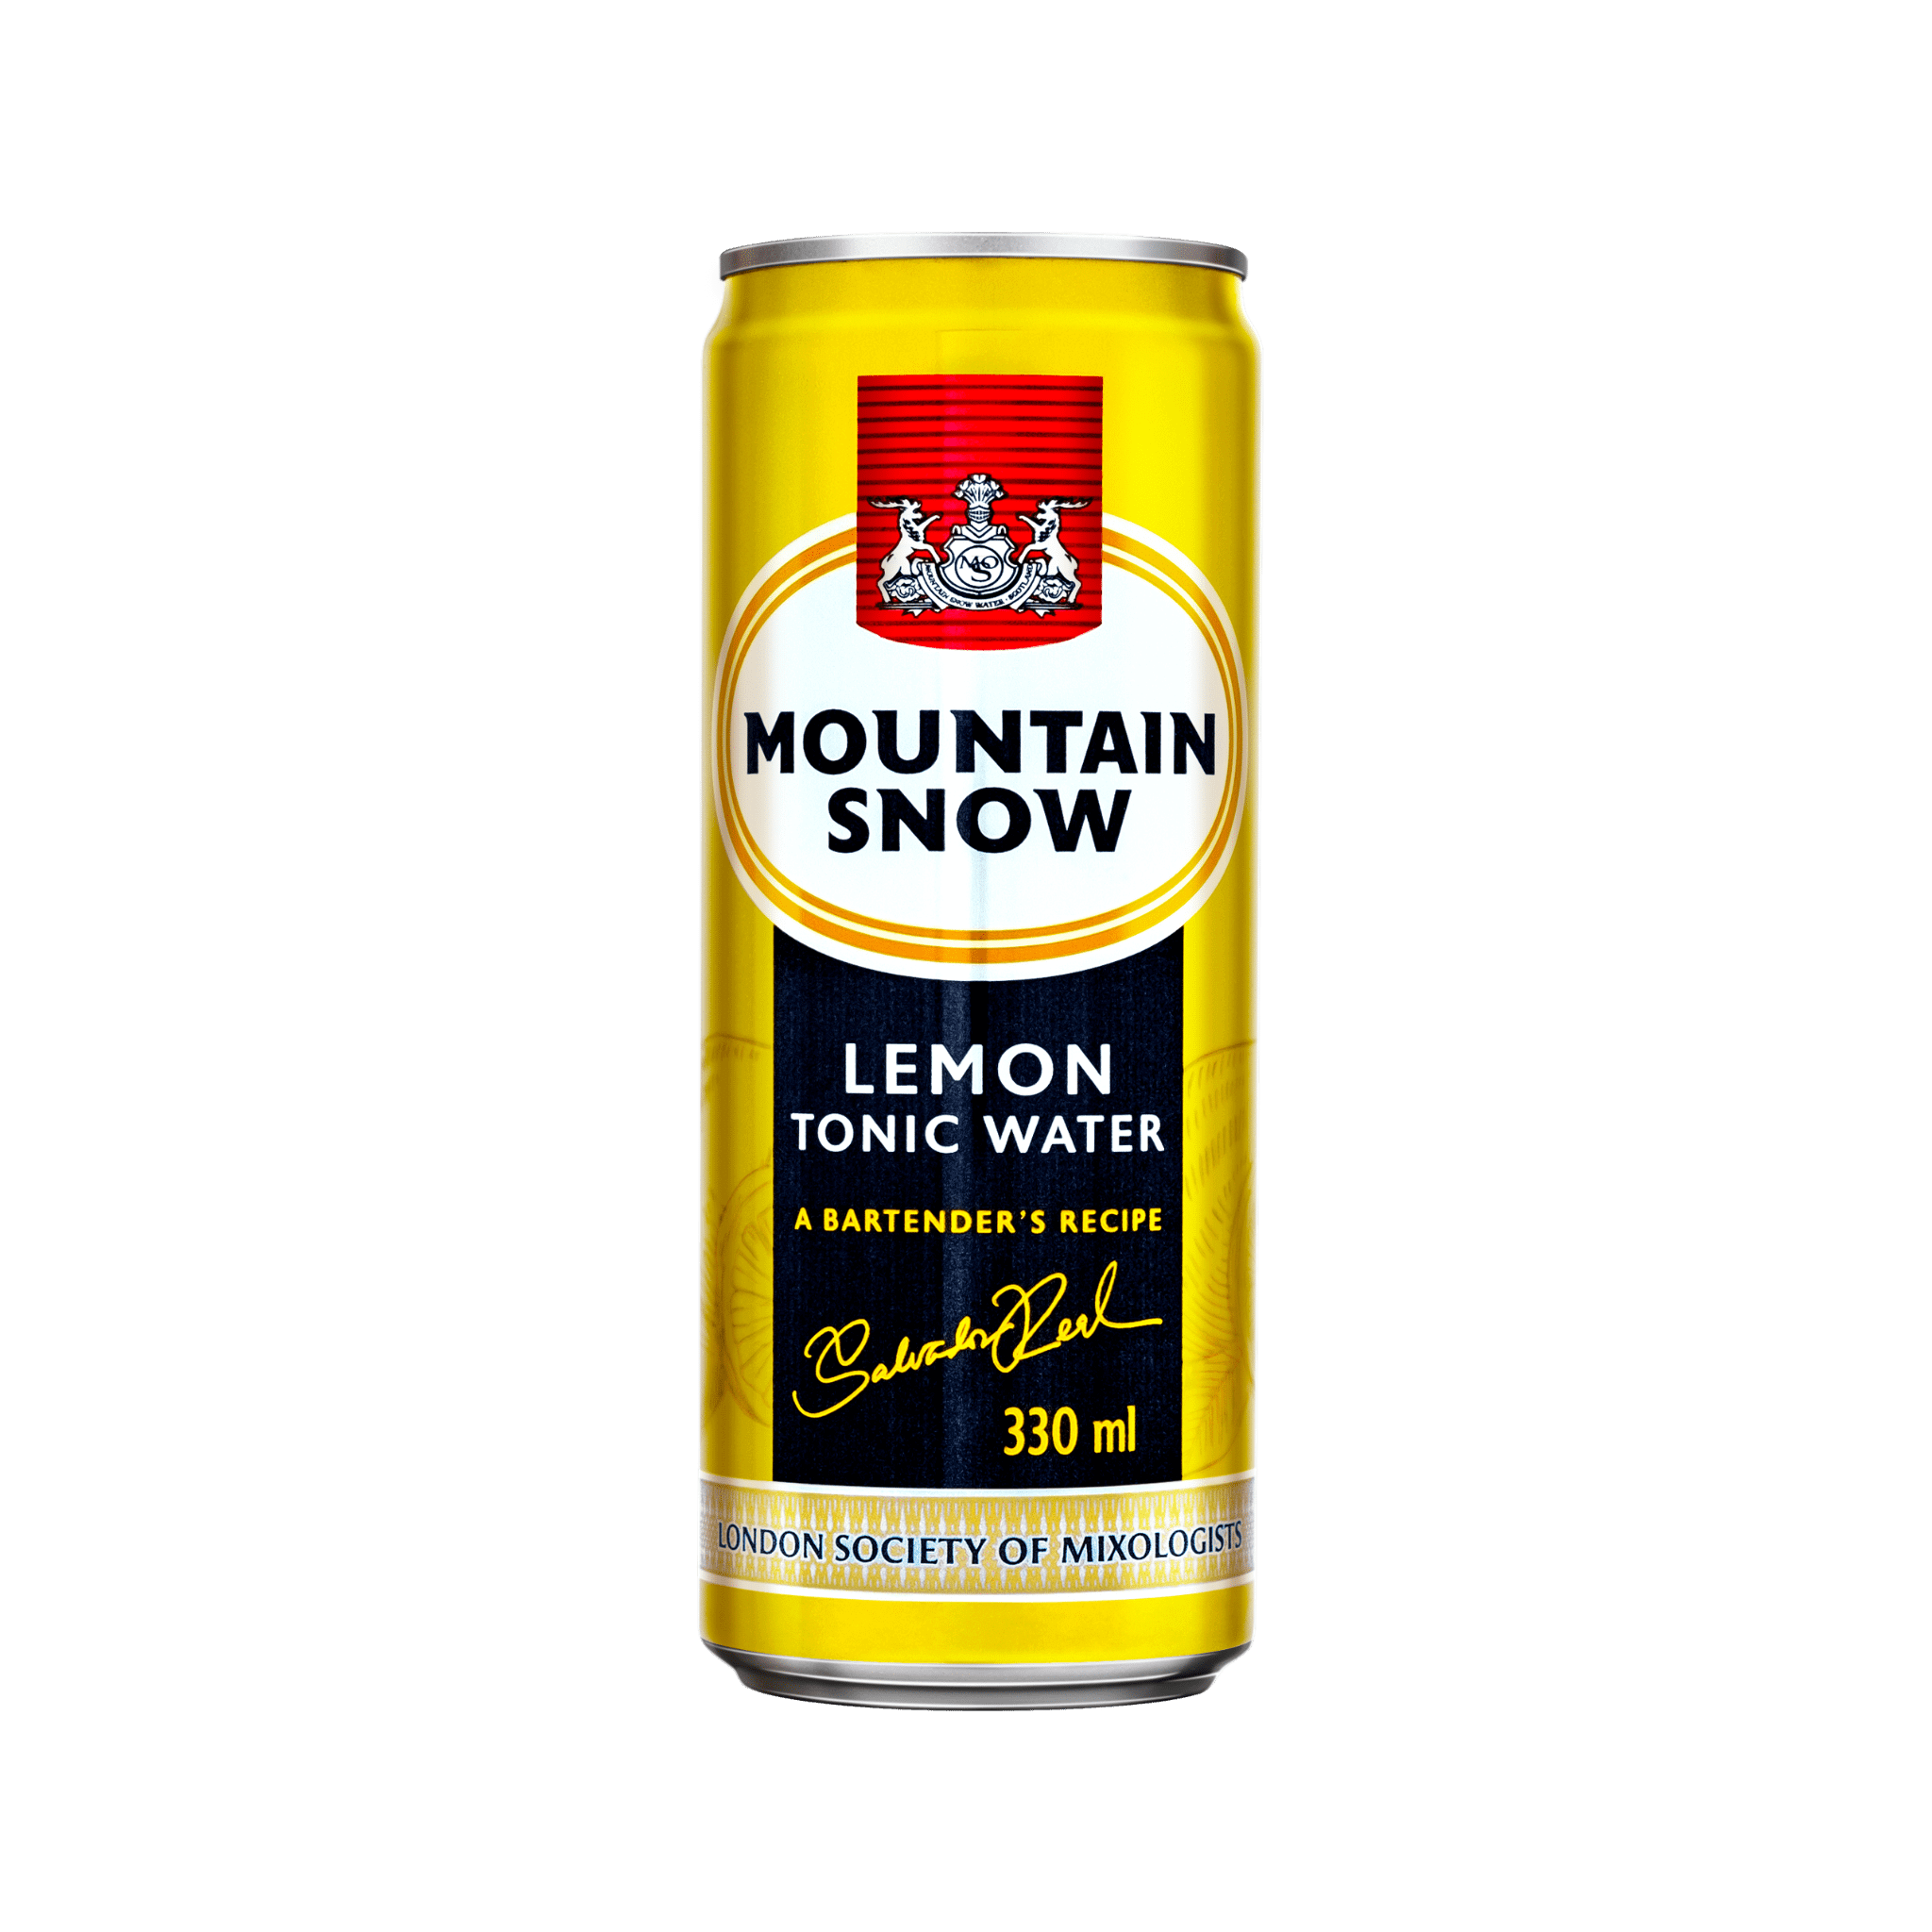 Mountain Snow Lemon Tonic Water 330ml Can at ₱39.00